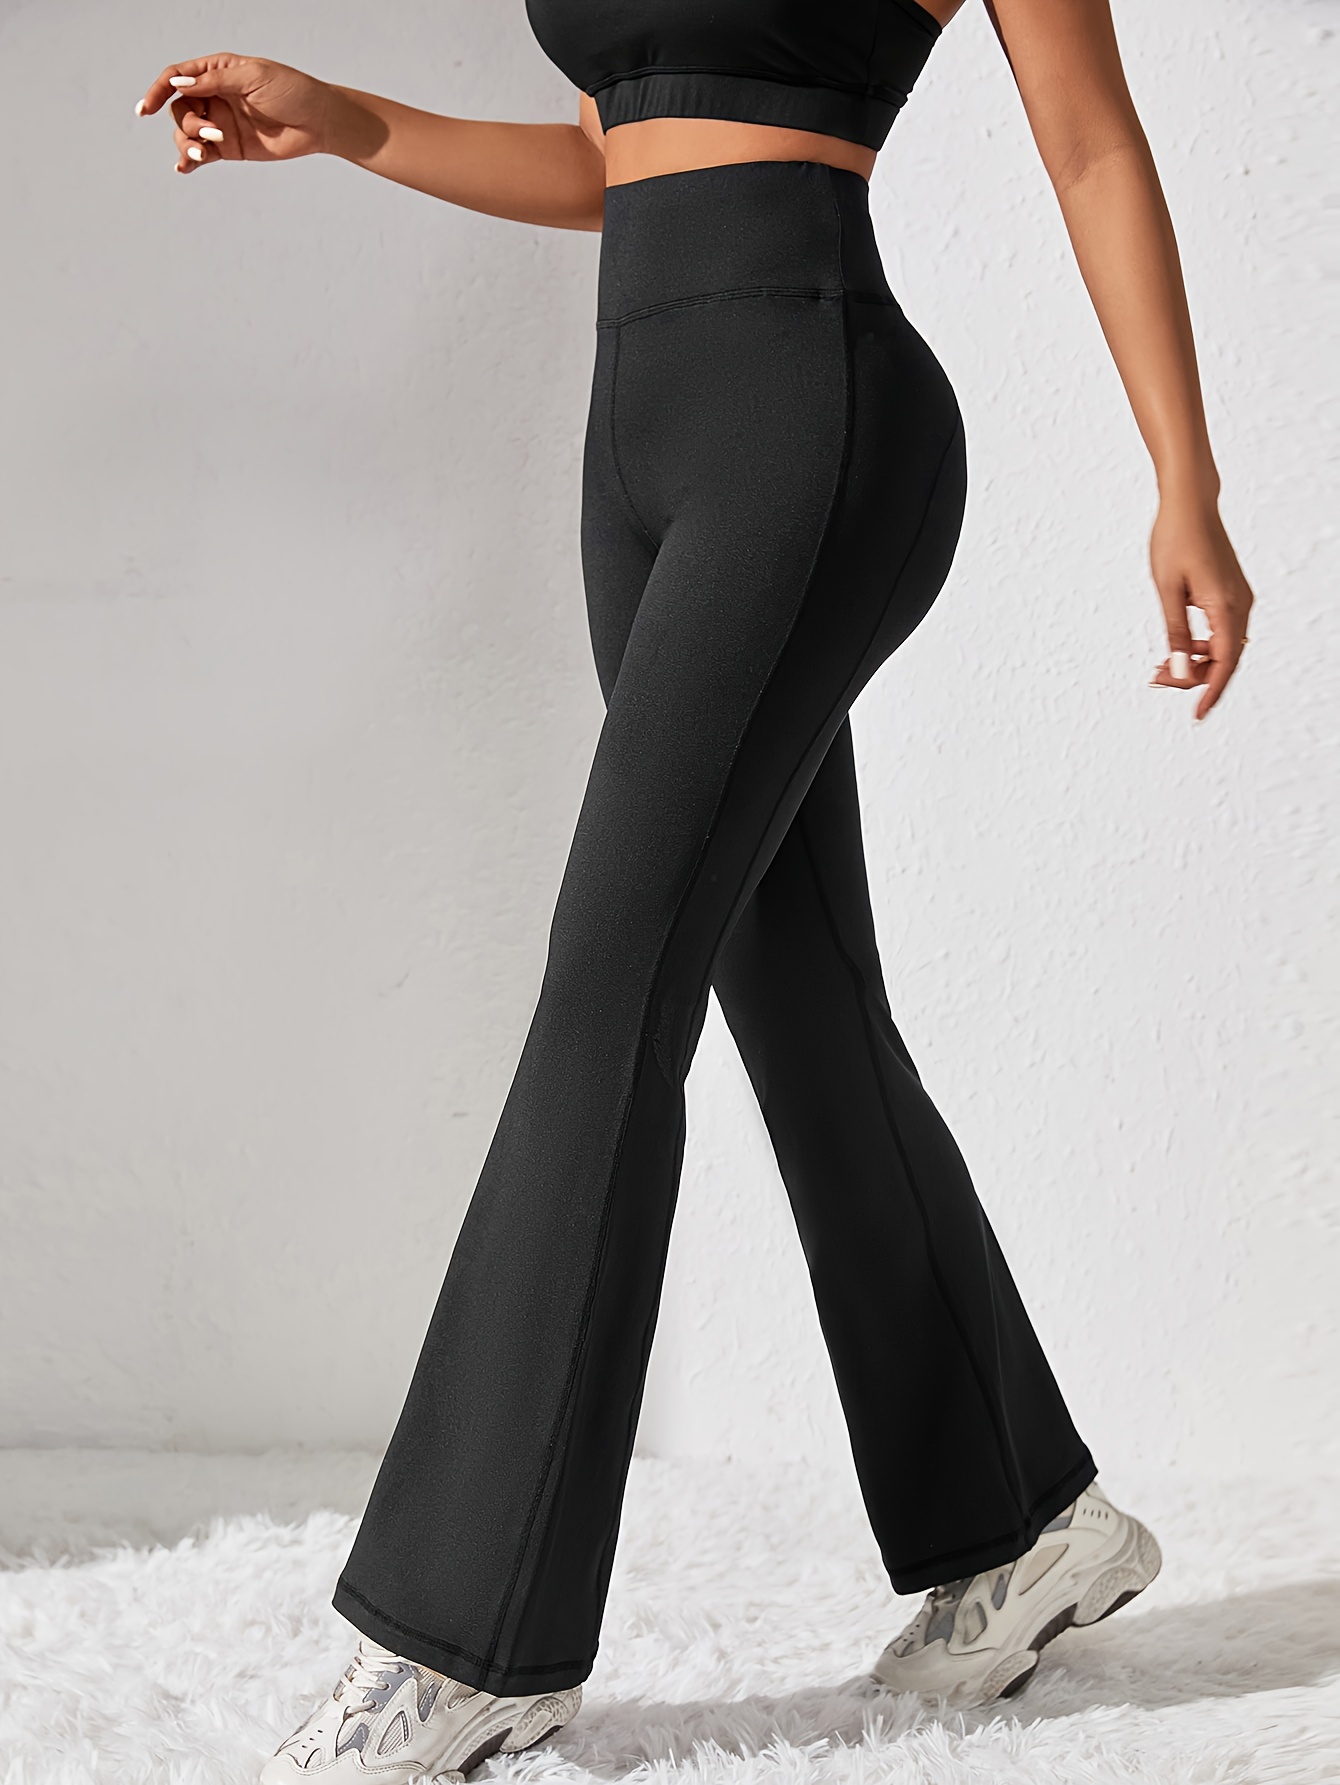 Reduce Price Hfyihgf Women's Bootcut Yoga Pants-Flare Leggings for Women  High Waisted Crossover V-Back Workout Lounge Bell Bottom Jazz Dress Pants( Dark Gray,L) 